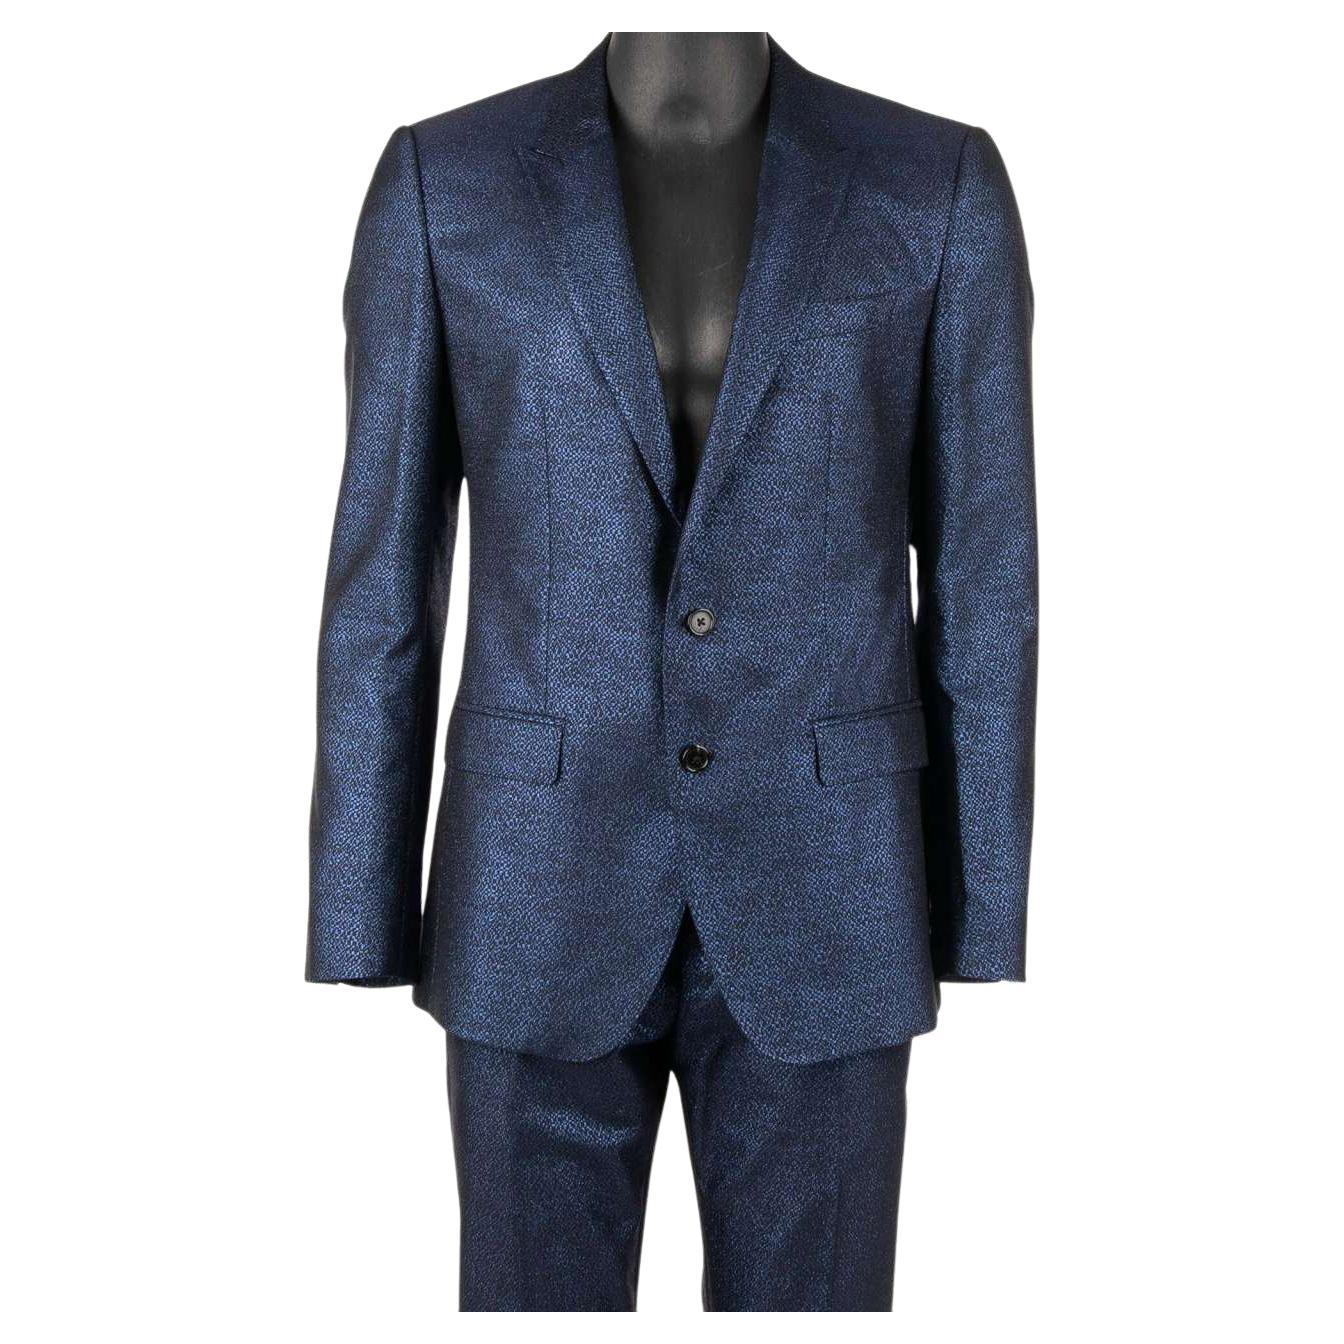 Dolce & Gabbana - Metallic Jacquard Suit MARTINI Blue Black 48 For Sale